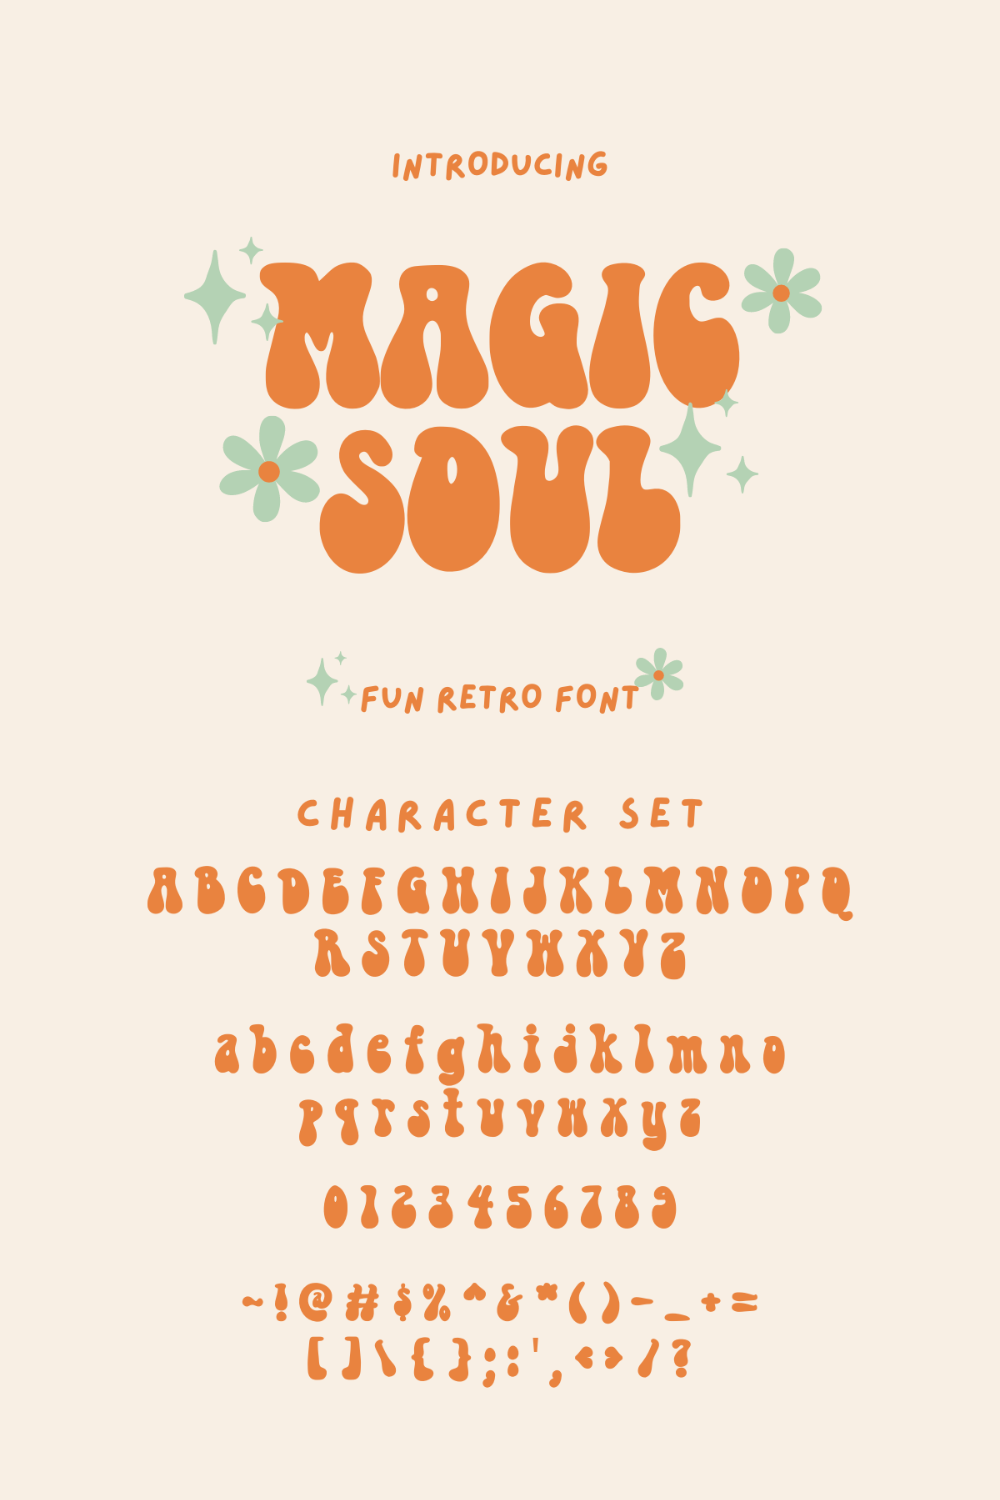 Magic Soul pinterest preview image.